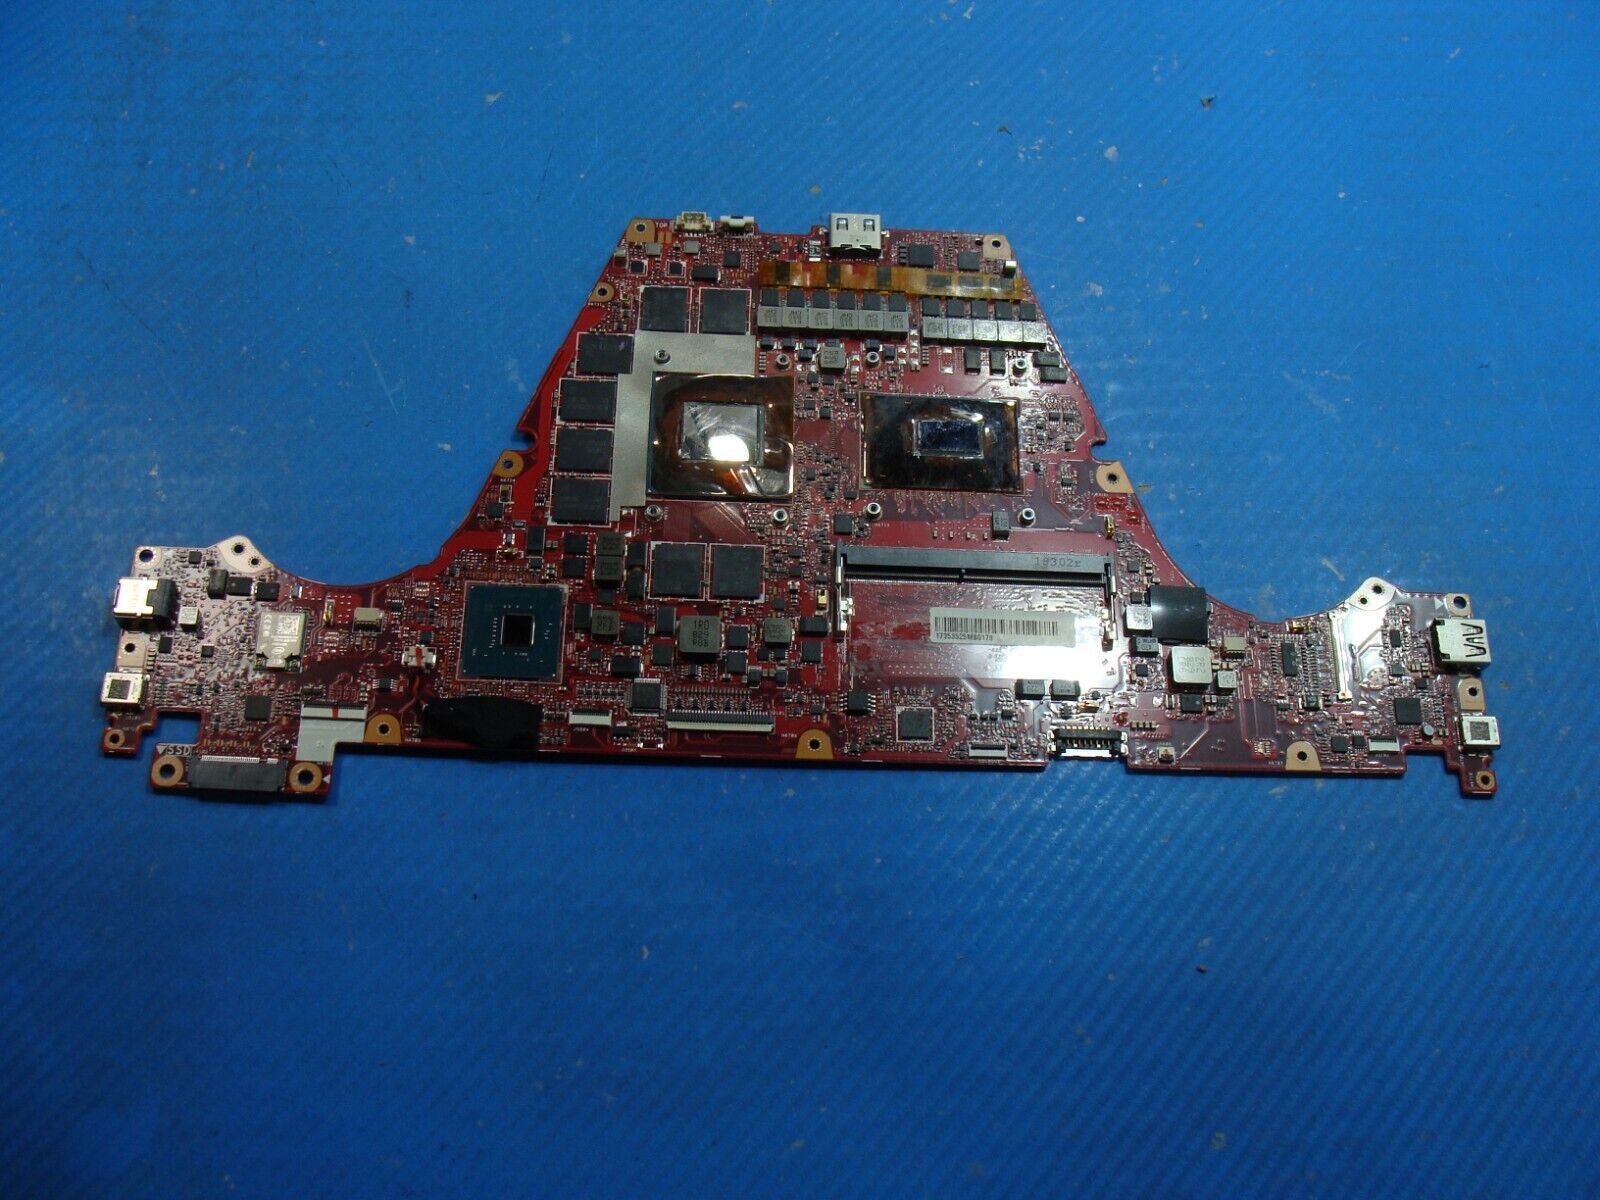 Asus ROG Zephyrus S GX531GS-AH76 15.6 i7-8750H 2.2GHz GTX 1070 8GB Motherboard